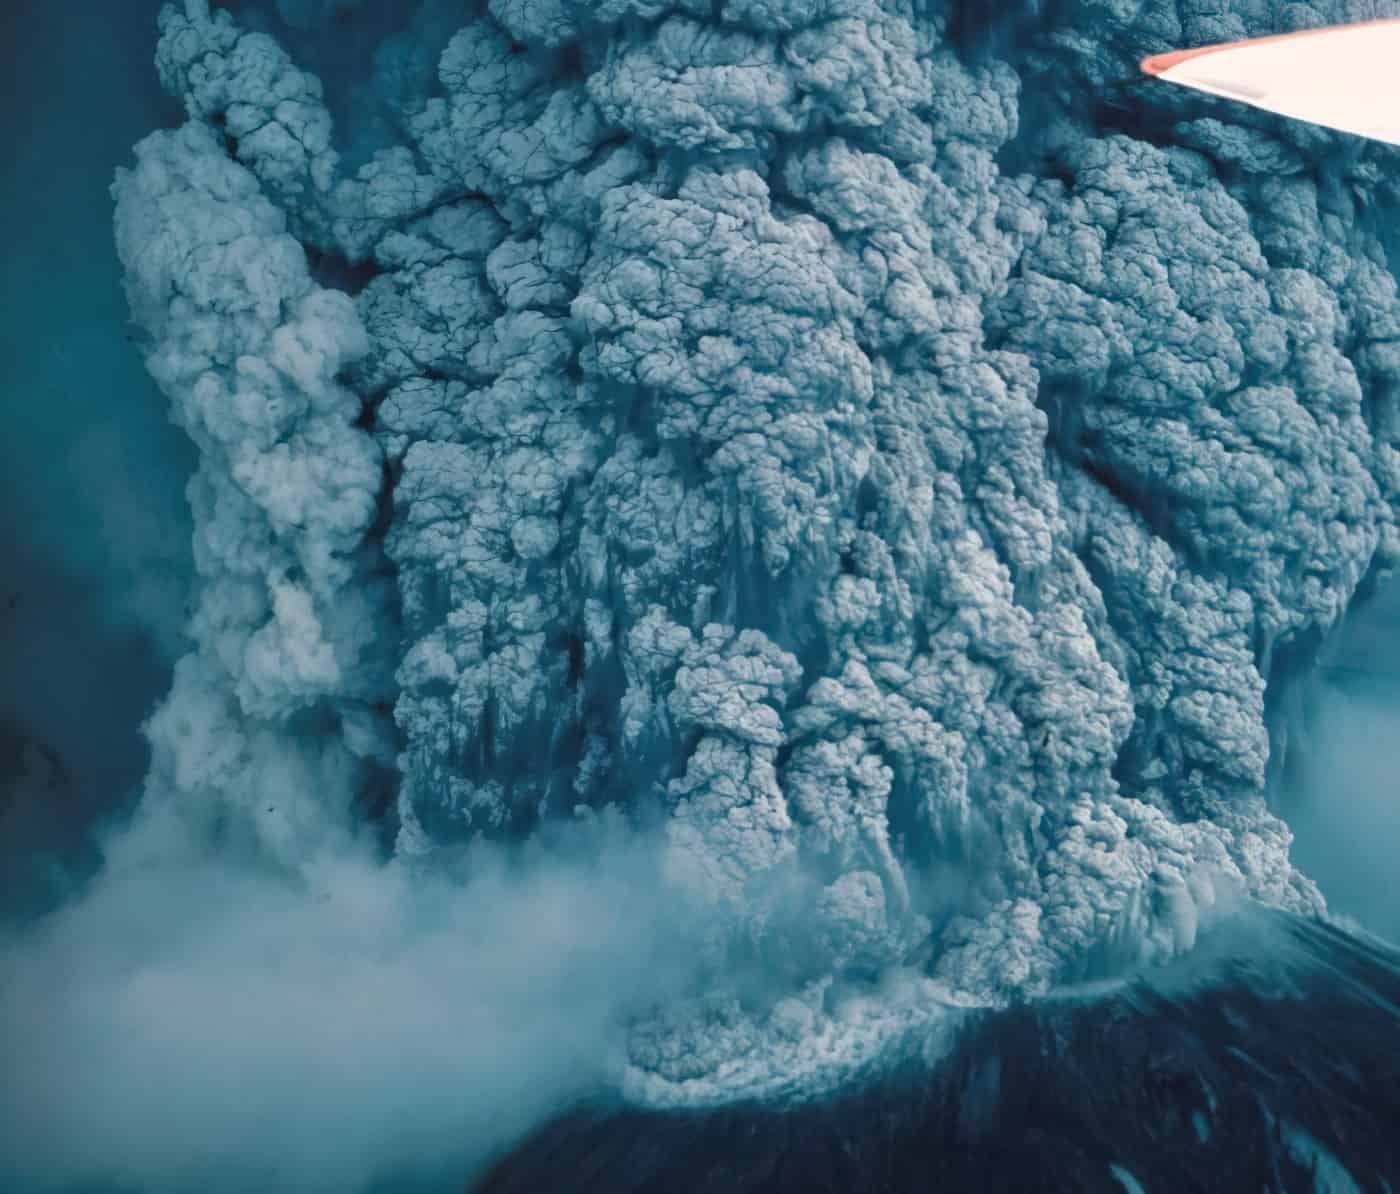 Death Defying Film Robert Landsburgs Last Photos of Mount St. Helens Eruption 07